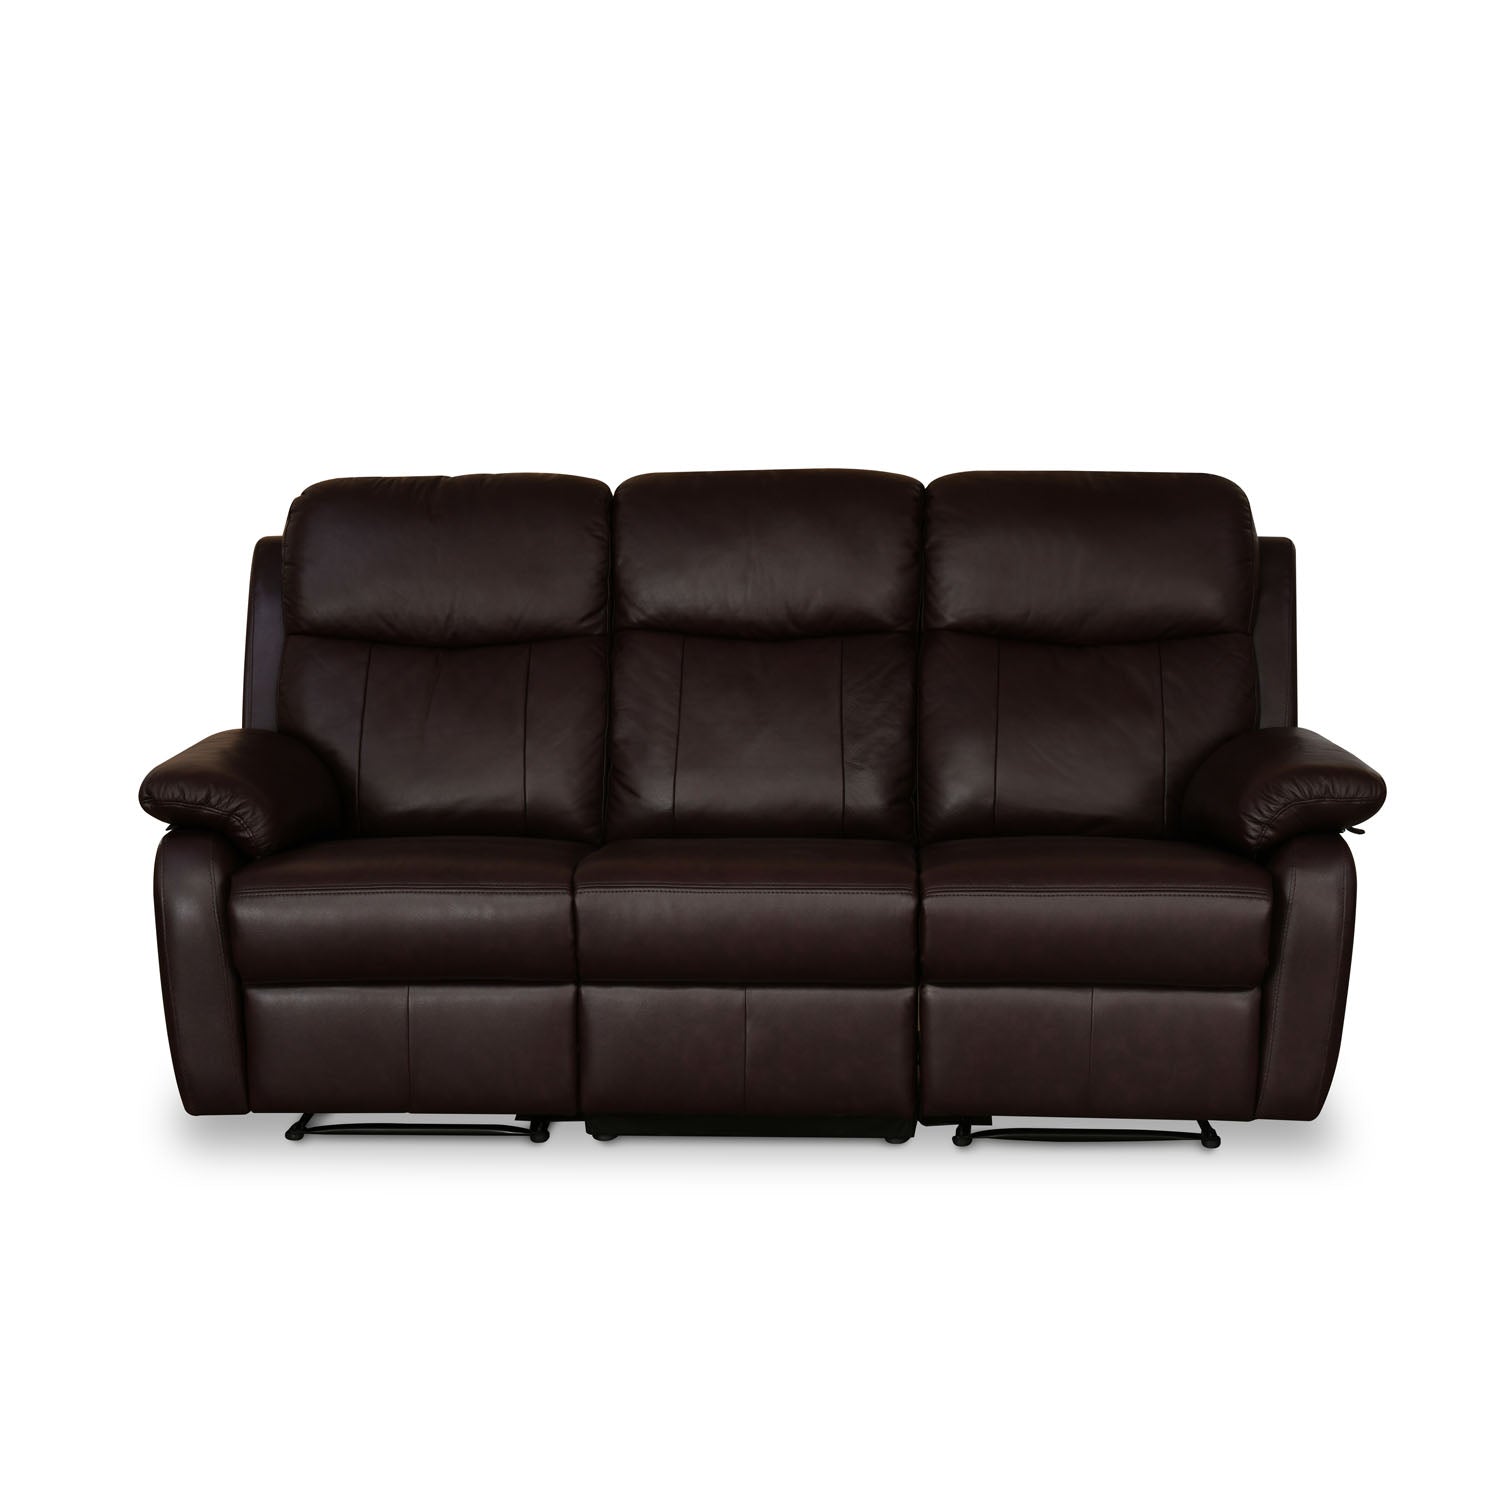 Nilkamal Carolina 3 Seater Sofa with 2 Recliners (Brown)